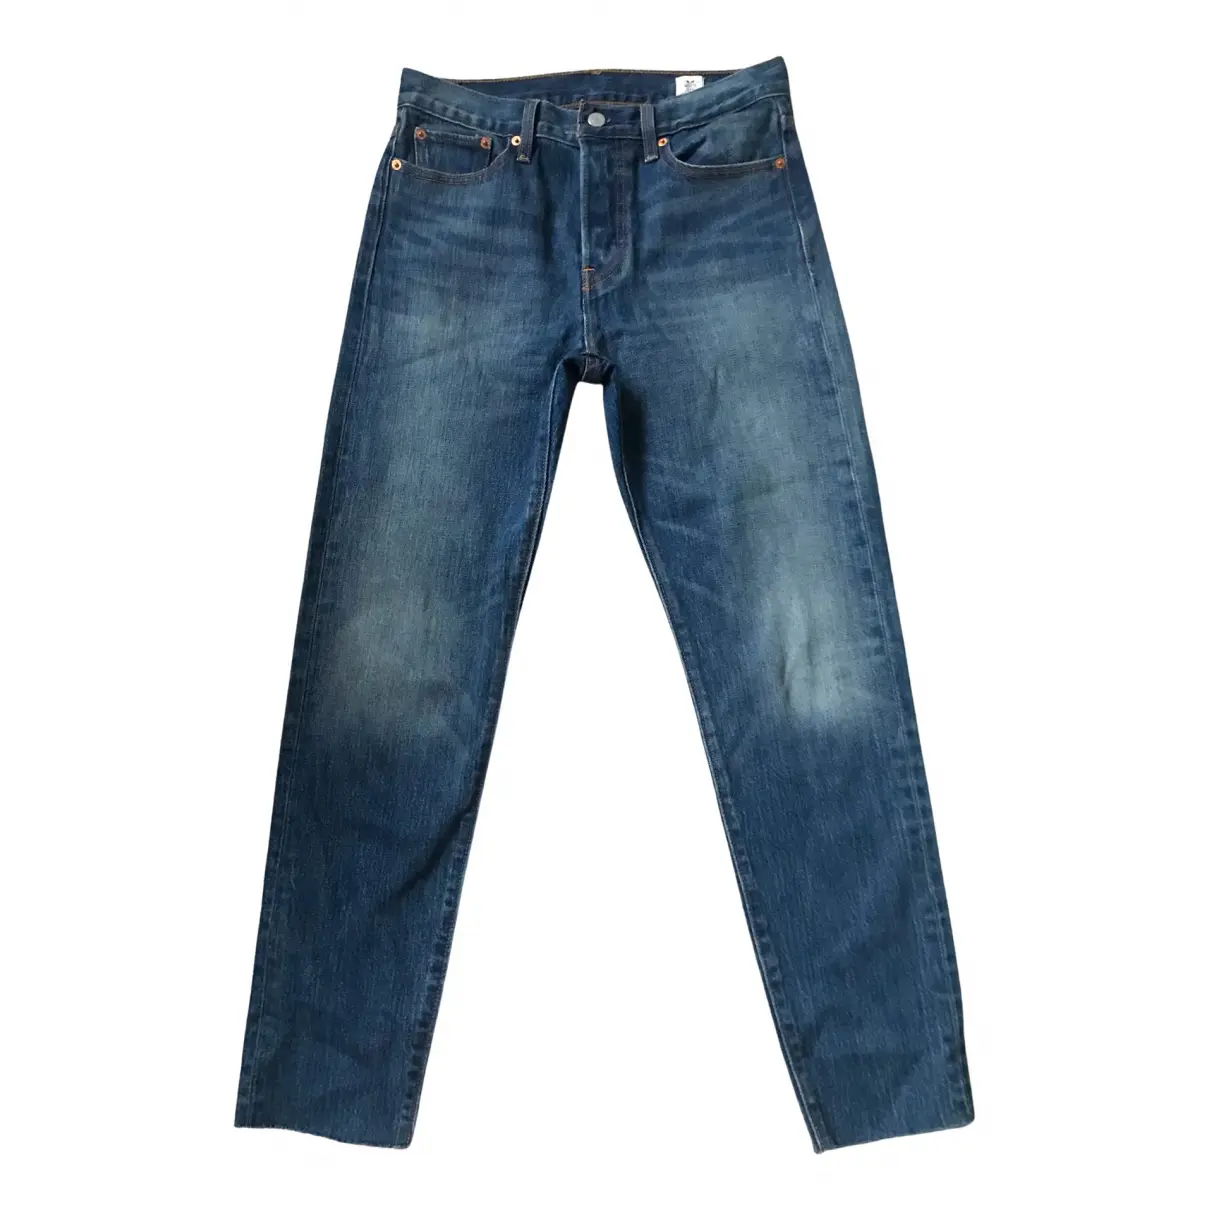 Slim jeans Levi's Vintage Clothing